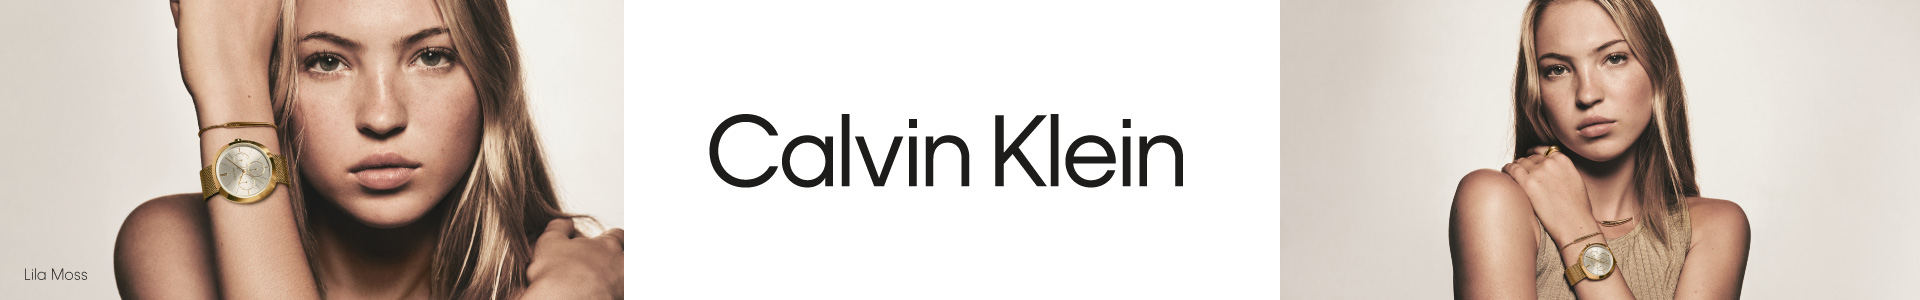 Relojes Calvin Klein 